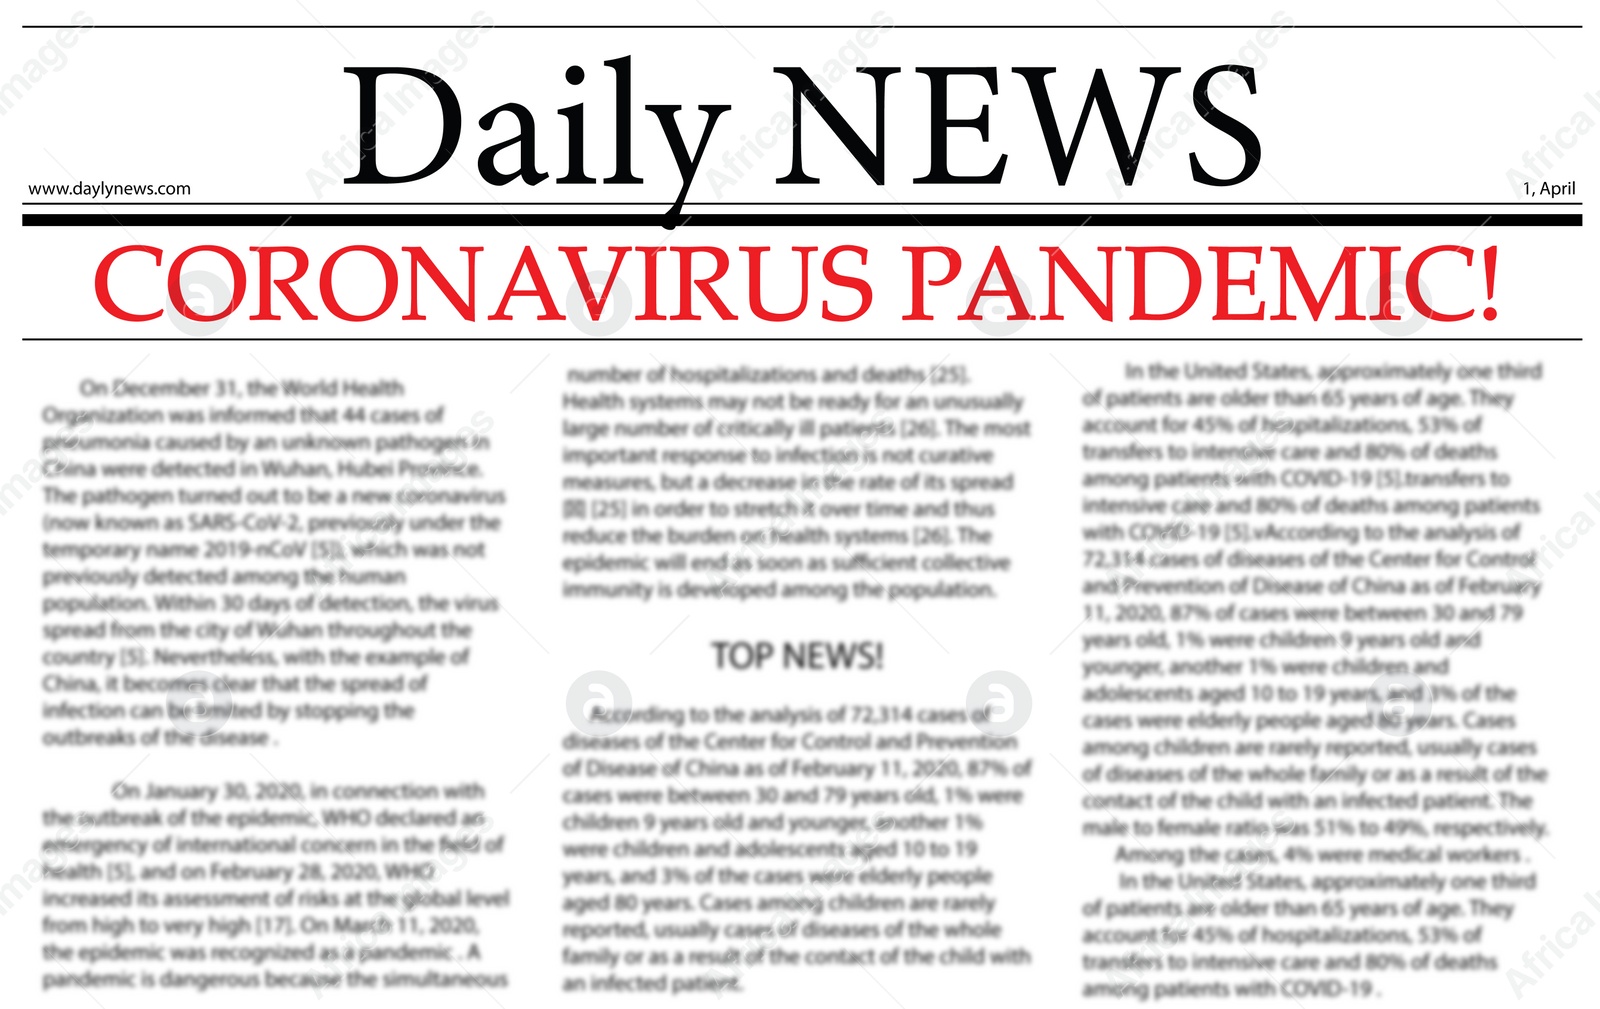 Illustration of Closeup view of newspaper with headline CORONAVIRUS PANDEMIC!